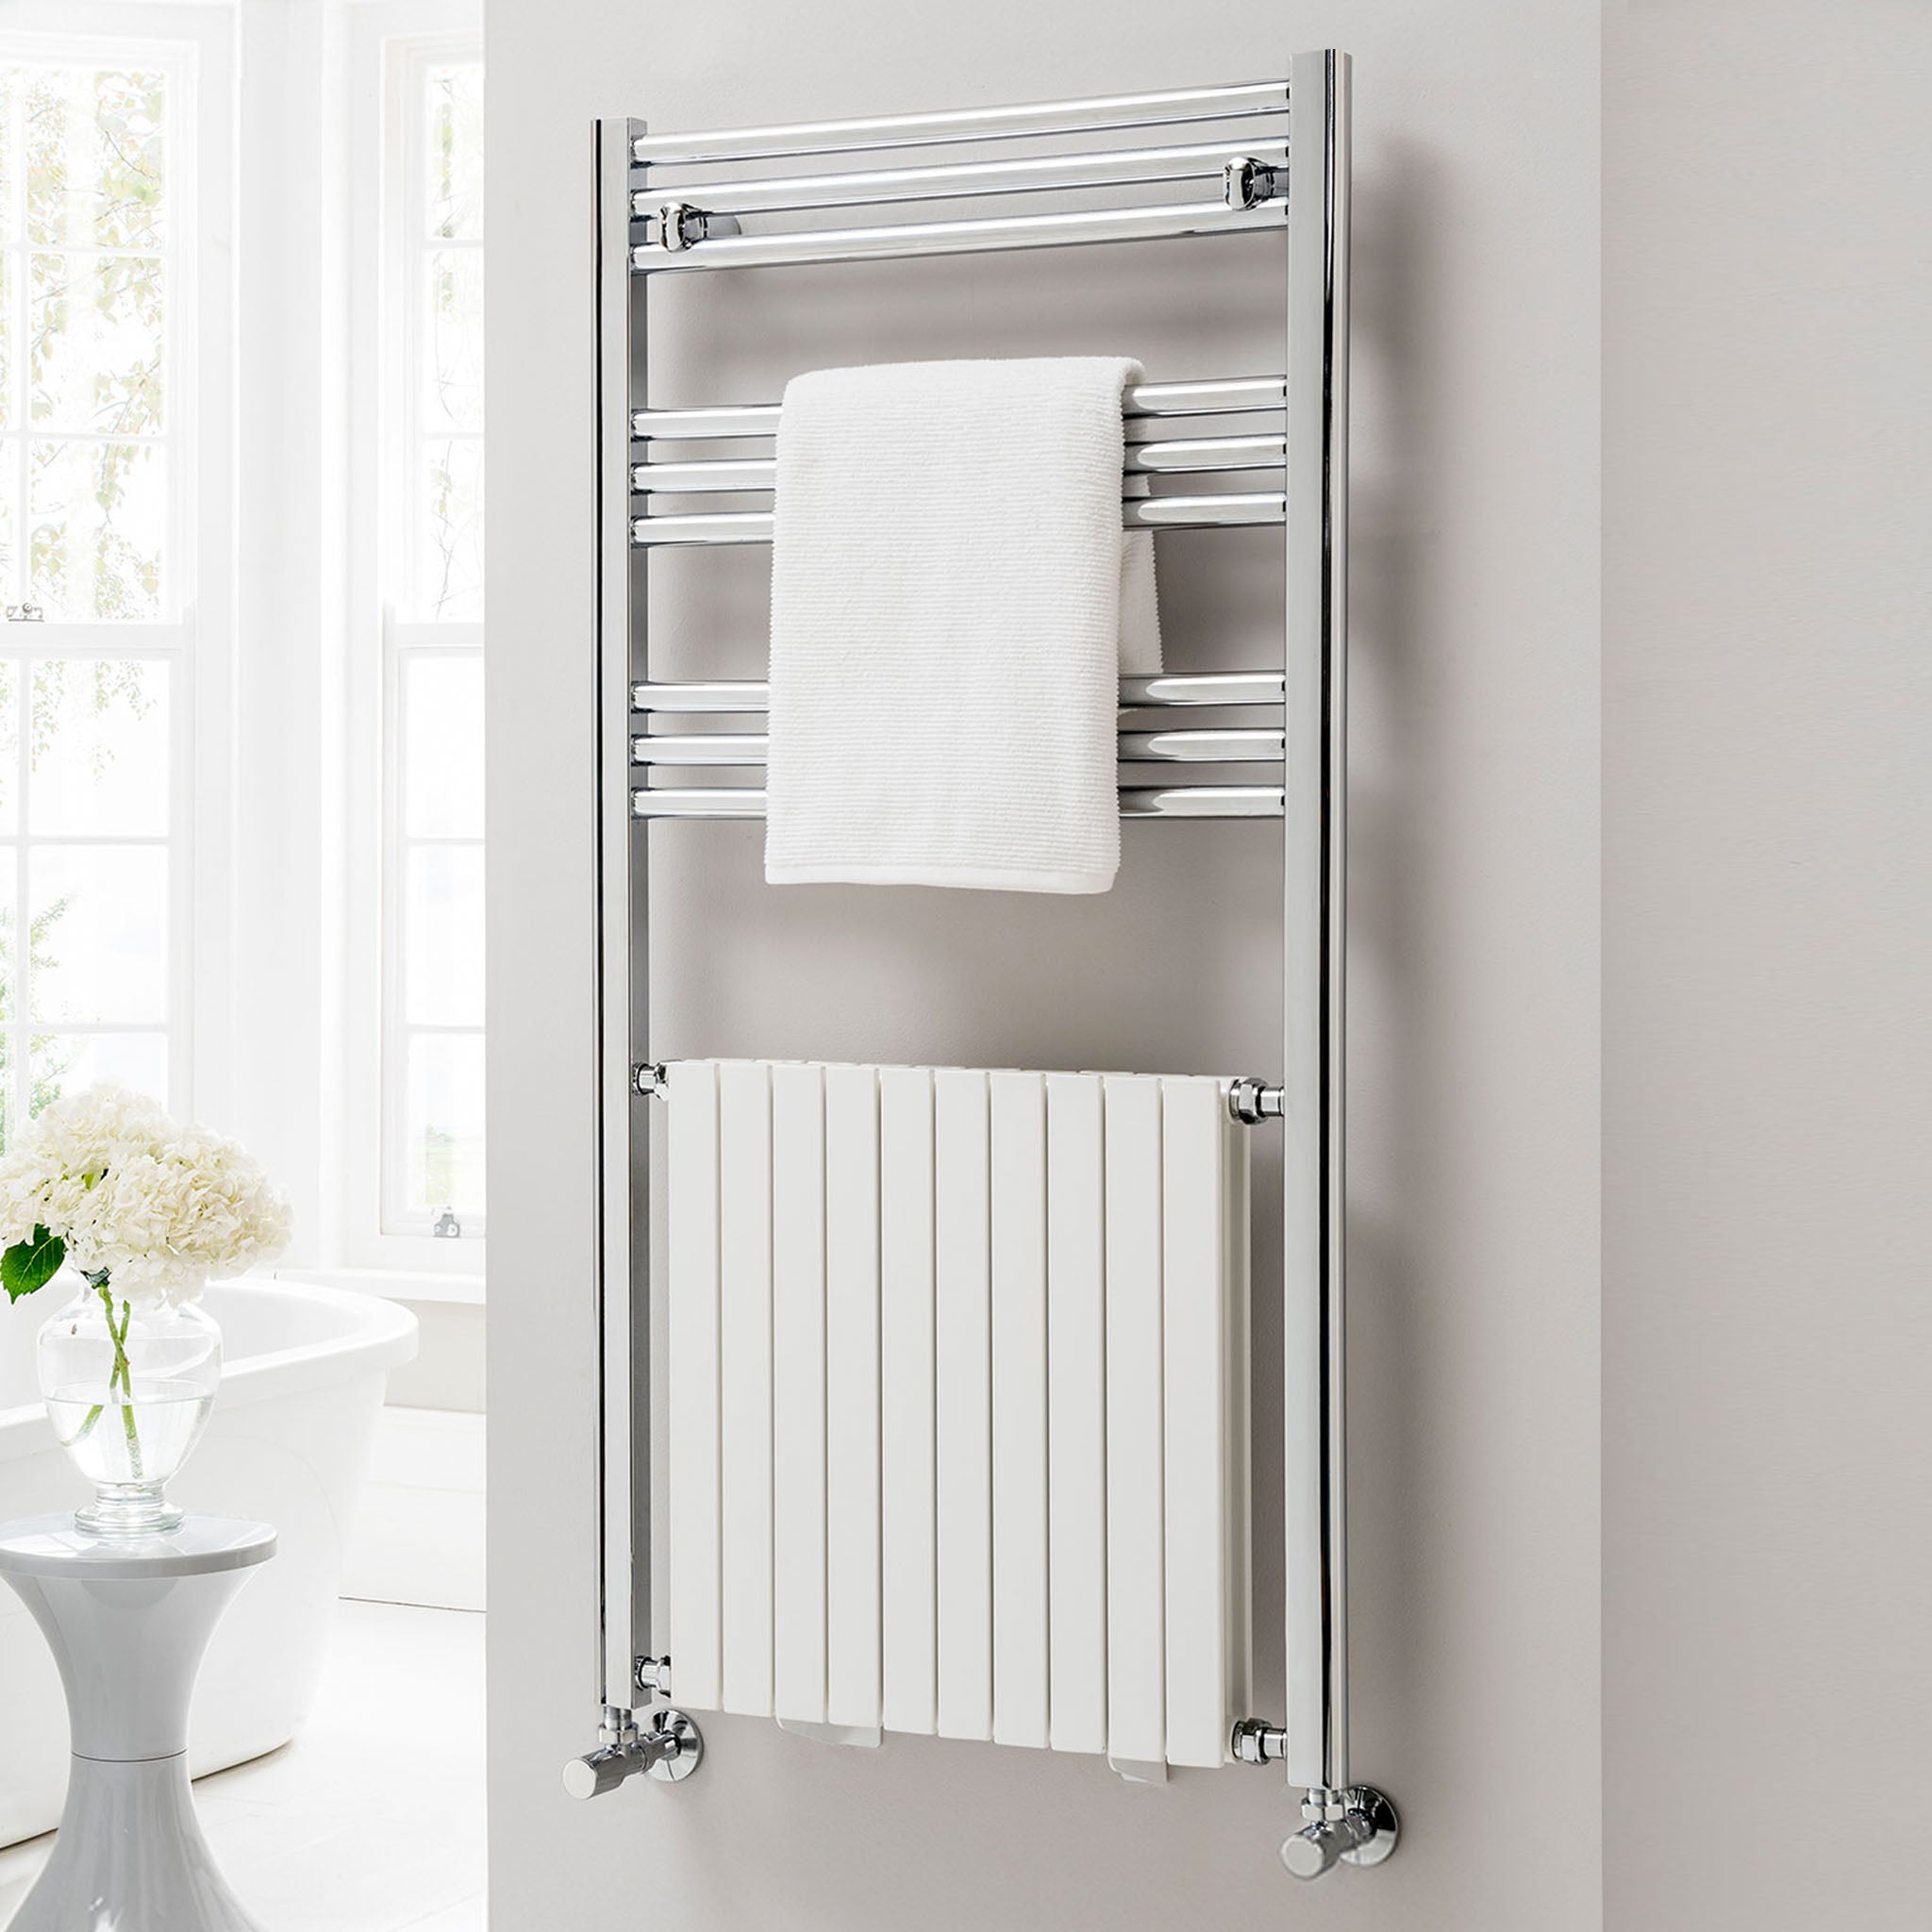 Vogue Harmonique Wall Mounted Heated Towel Rail